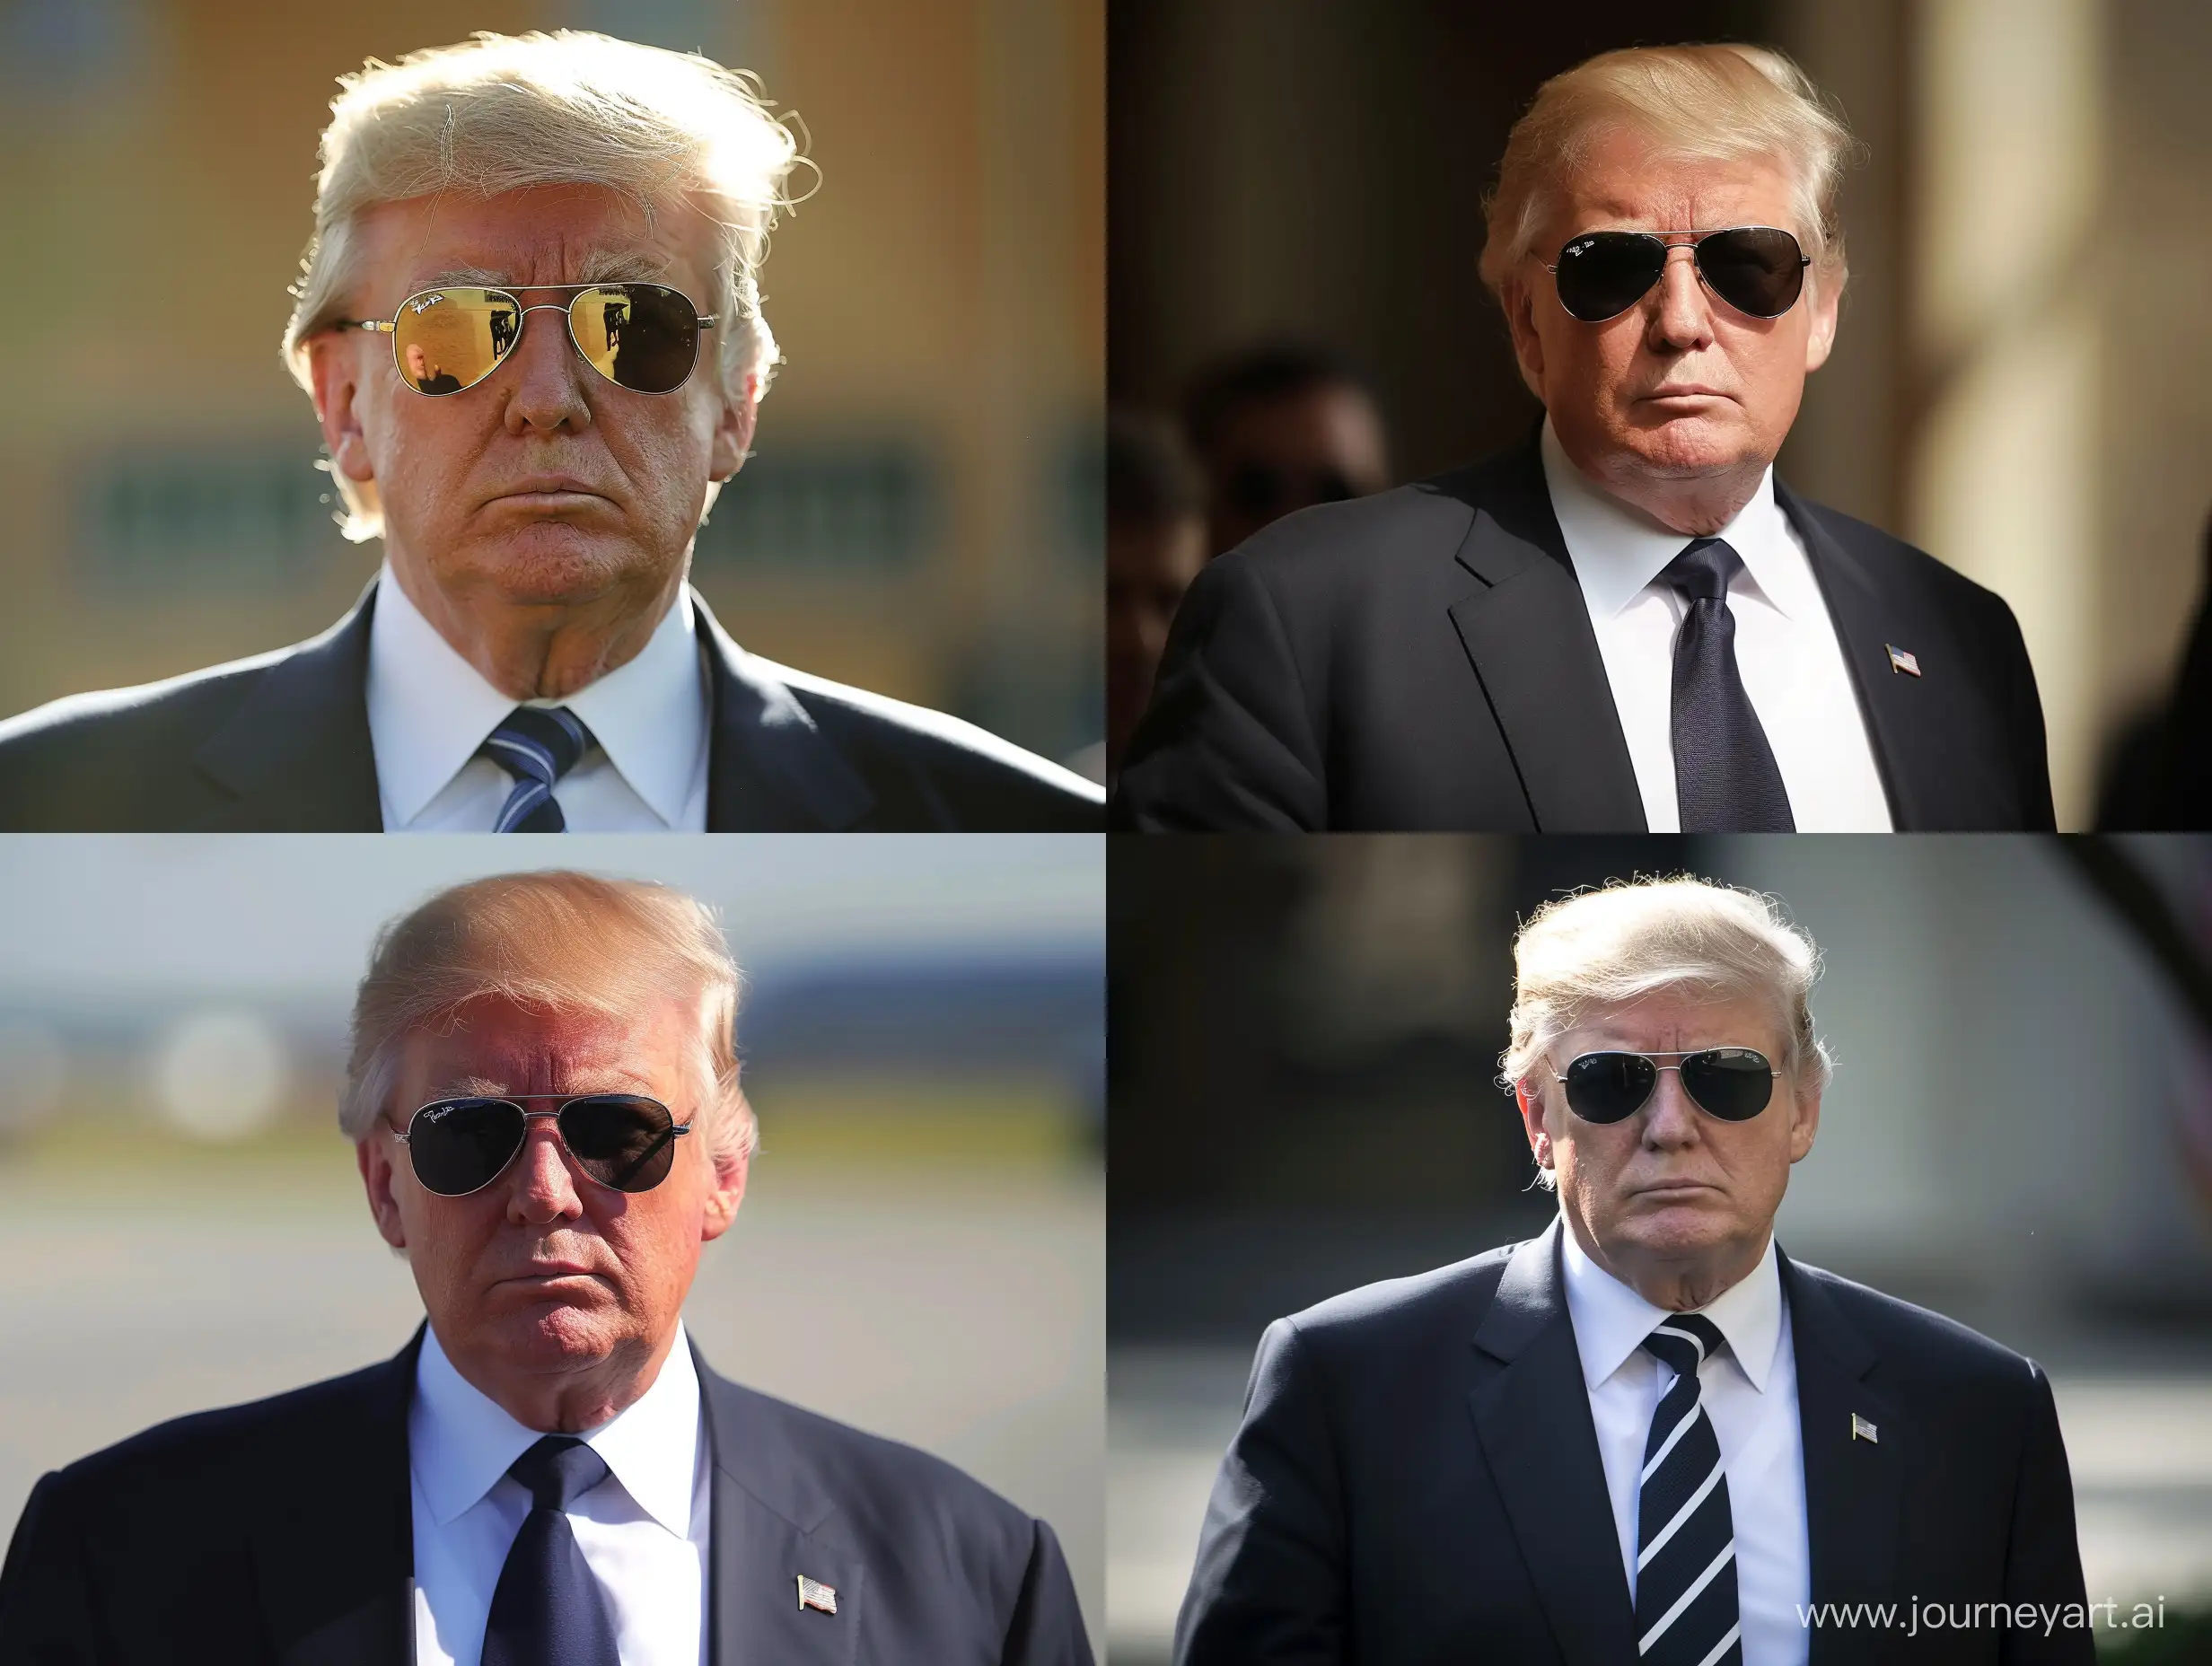 Donald-Trump-Wearing-Sunglasses-at-Sunset